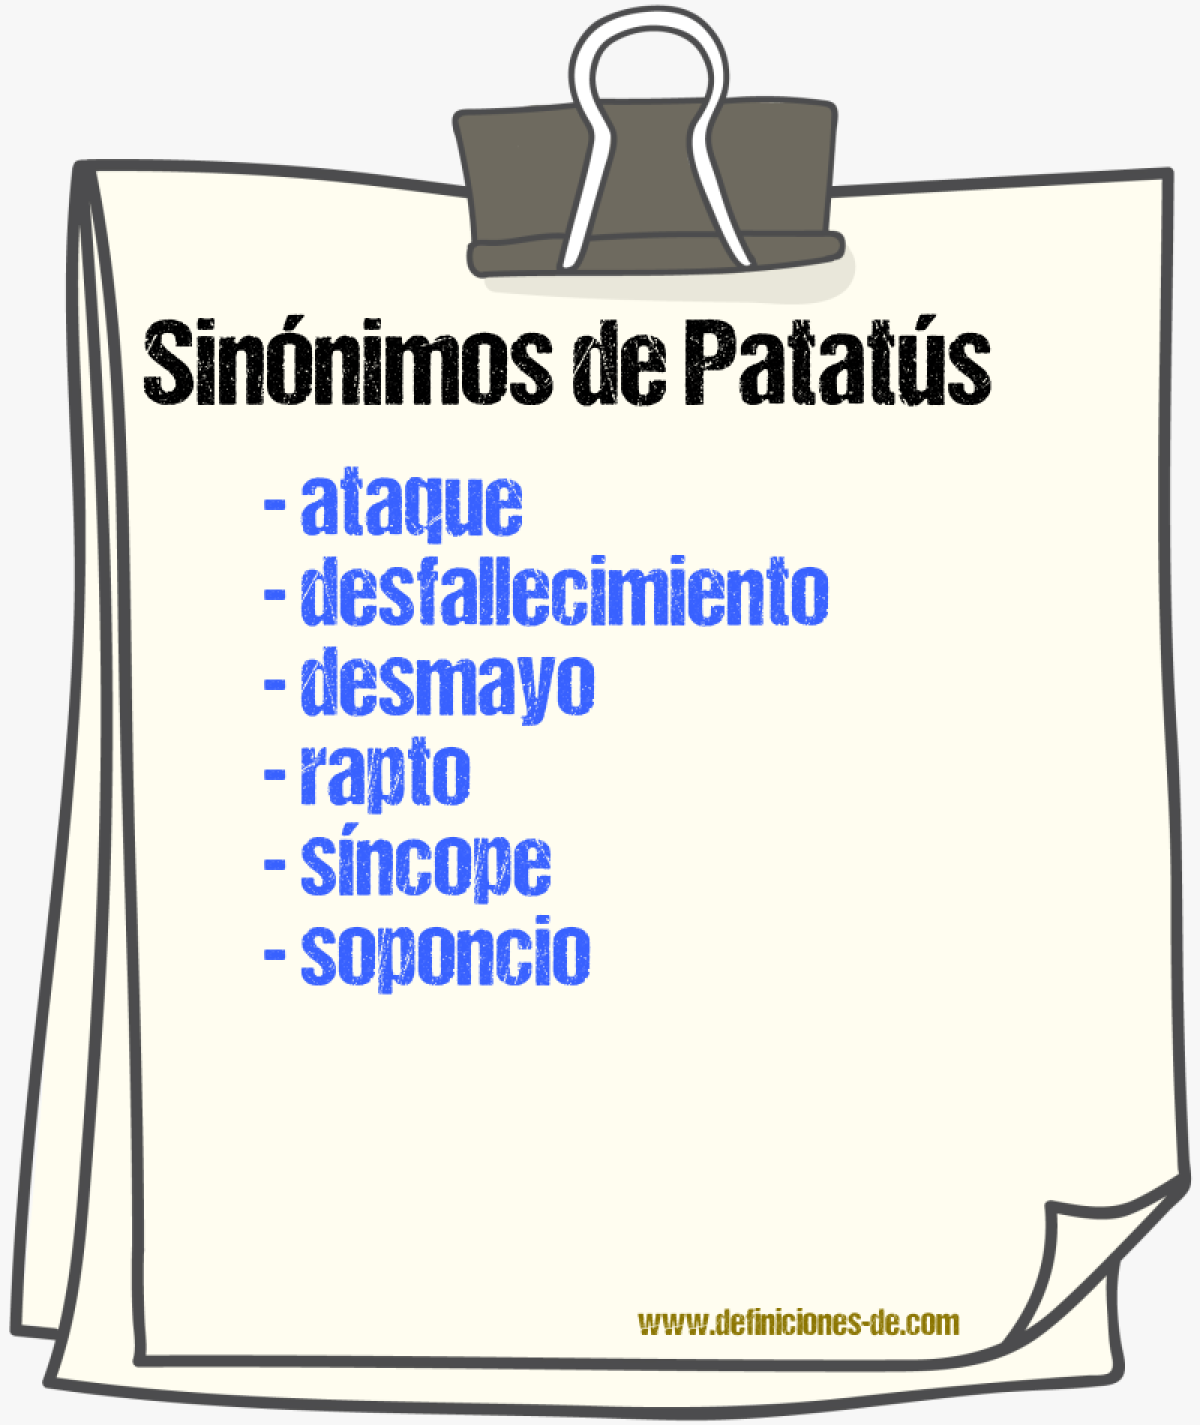 Sinónimos de patatús